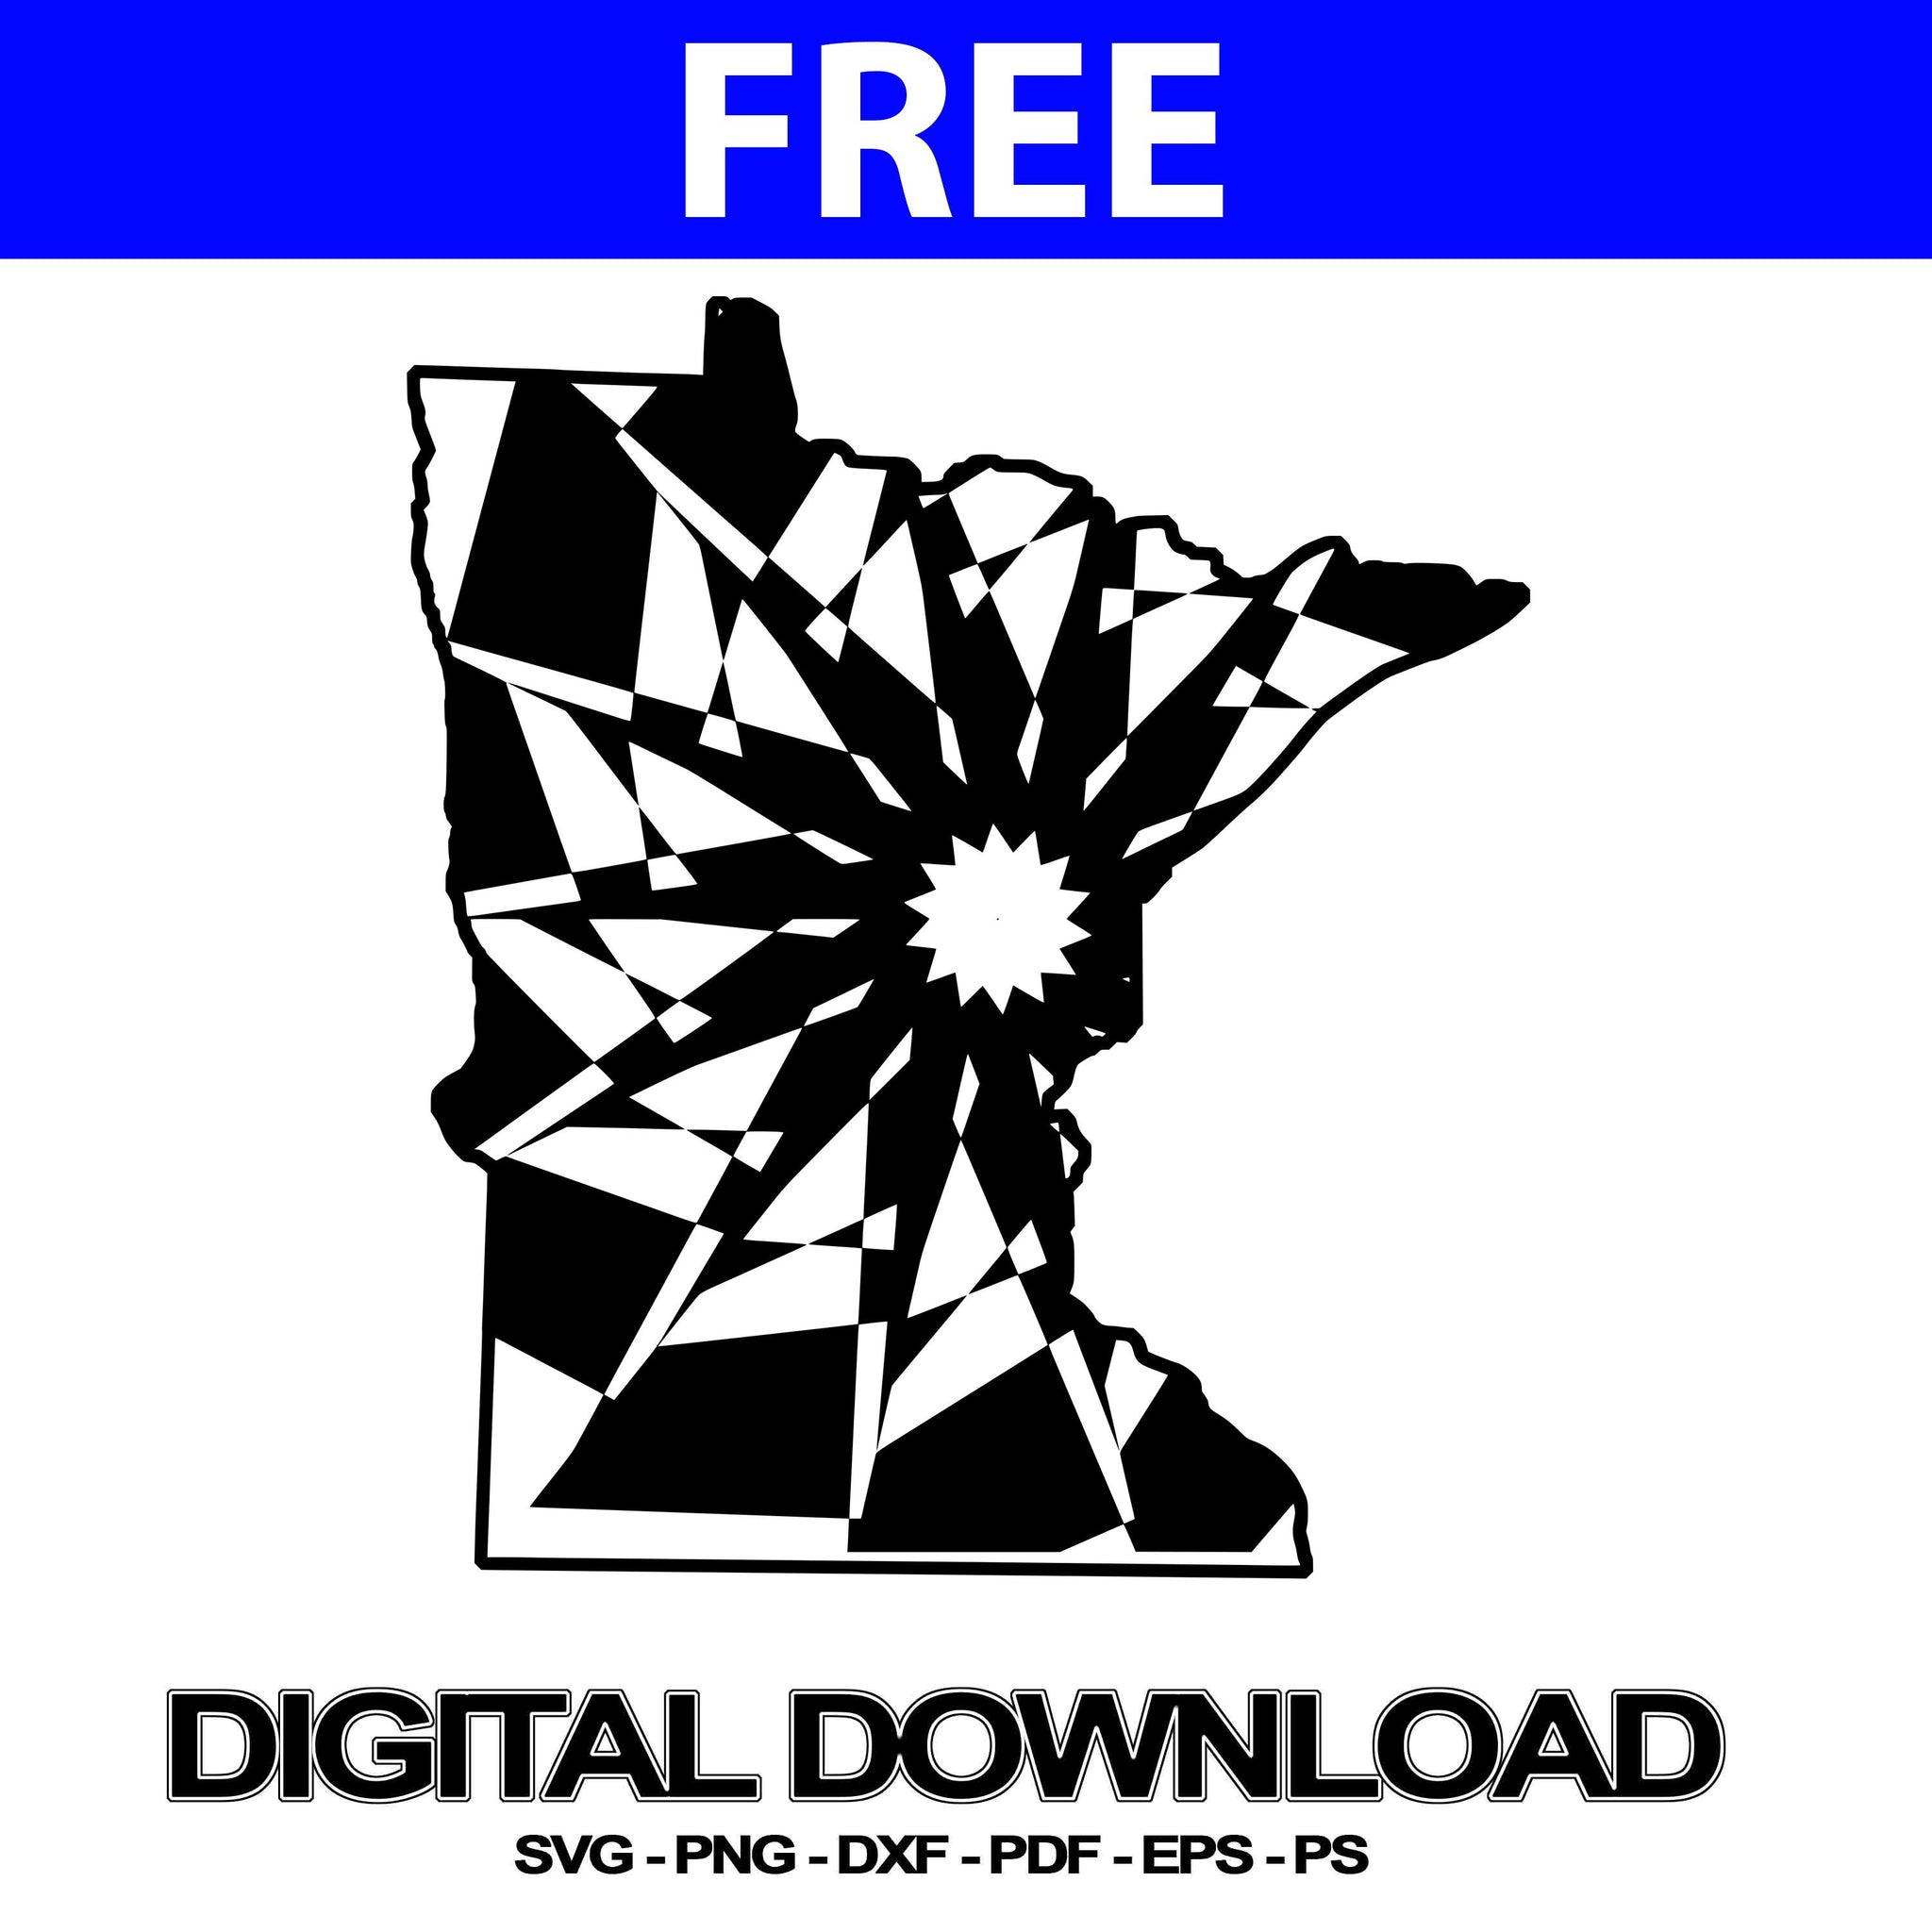 Free Free 222 Minnesota Svg Free SVG PNG EPS DXF File